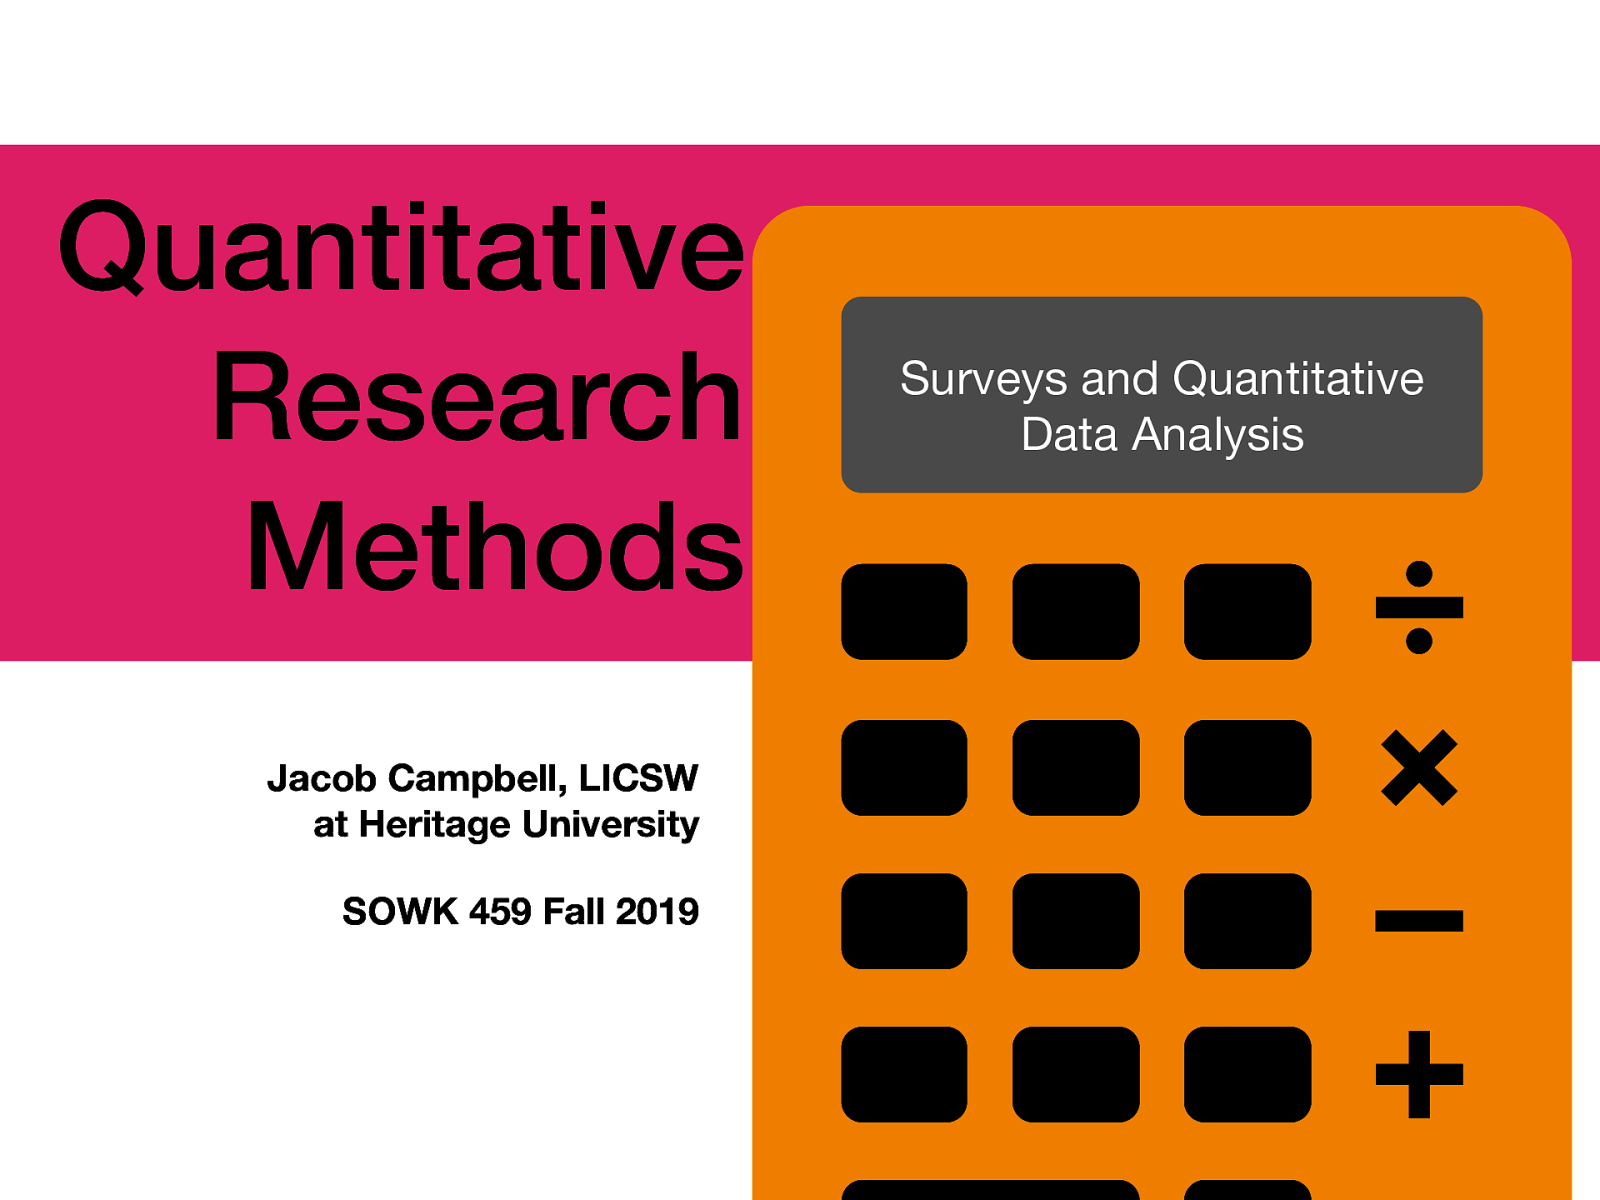 Week 12: Quantitative Research Methods - Surveys and Quantitative Data Analysis